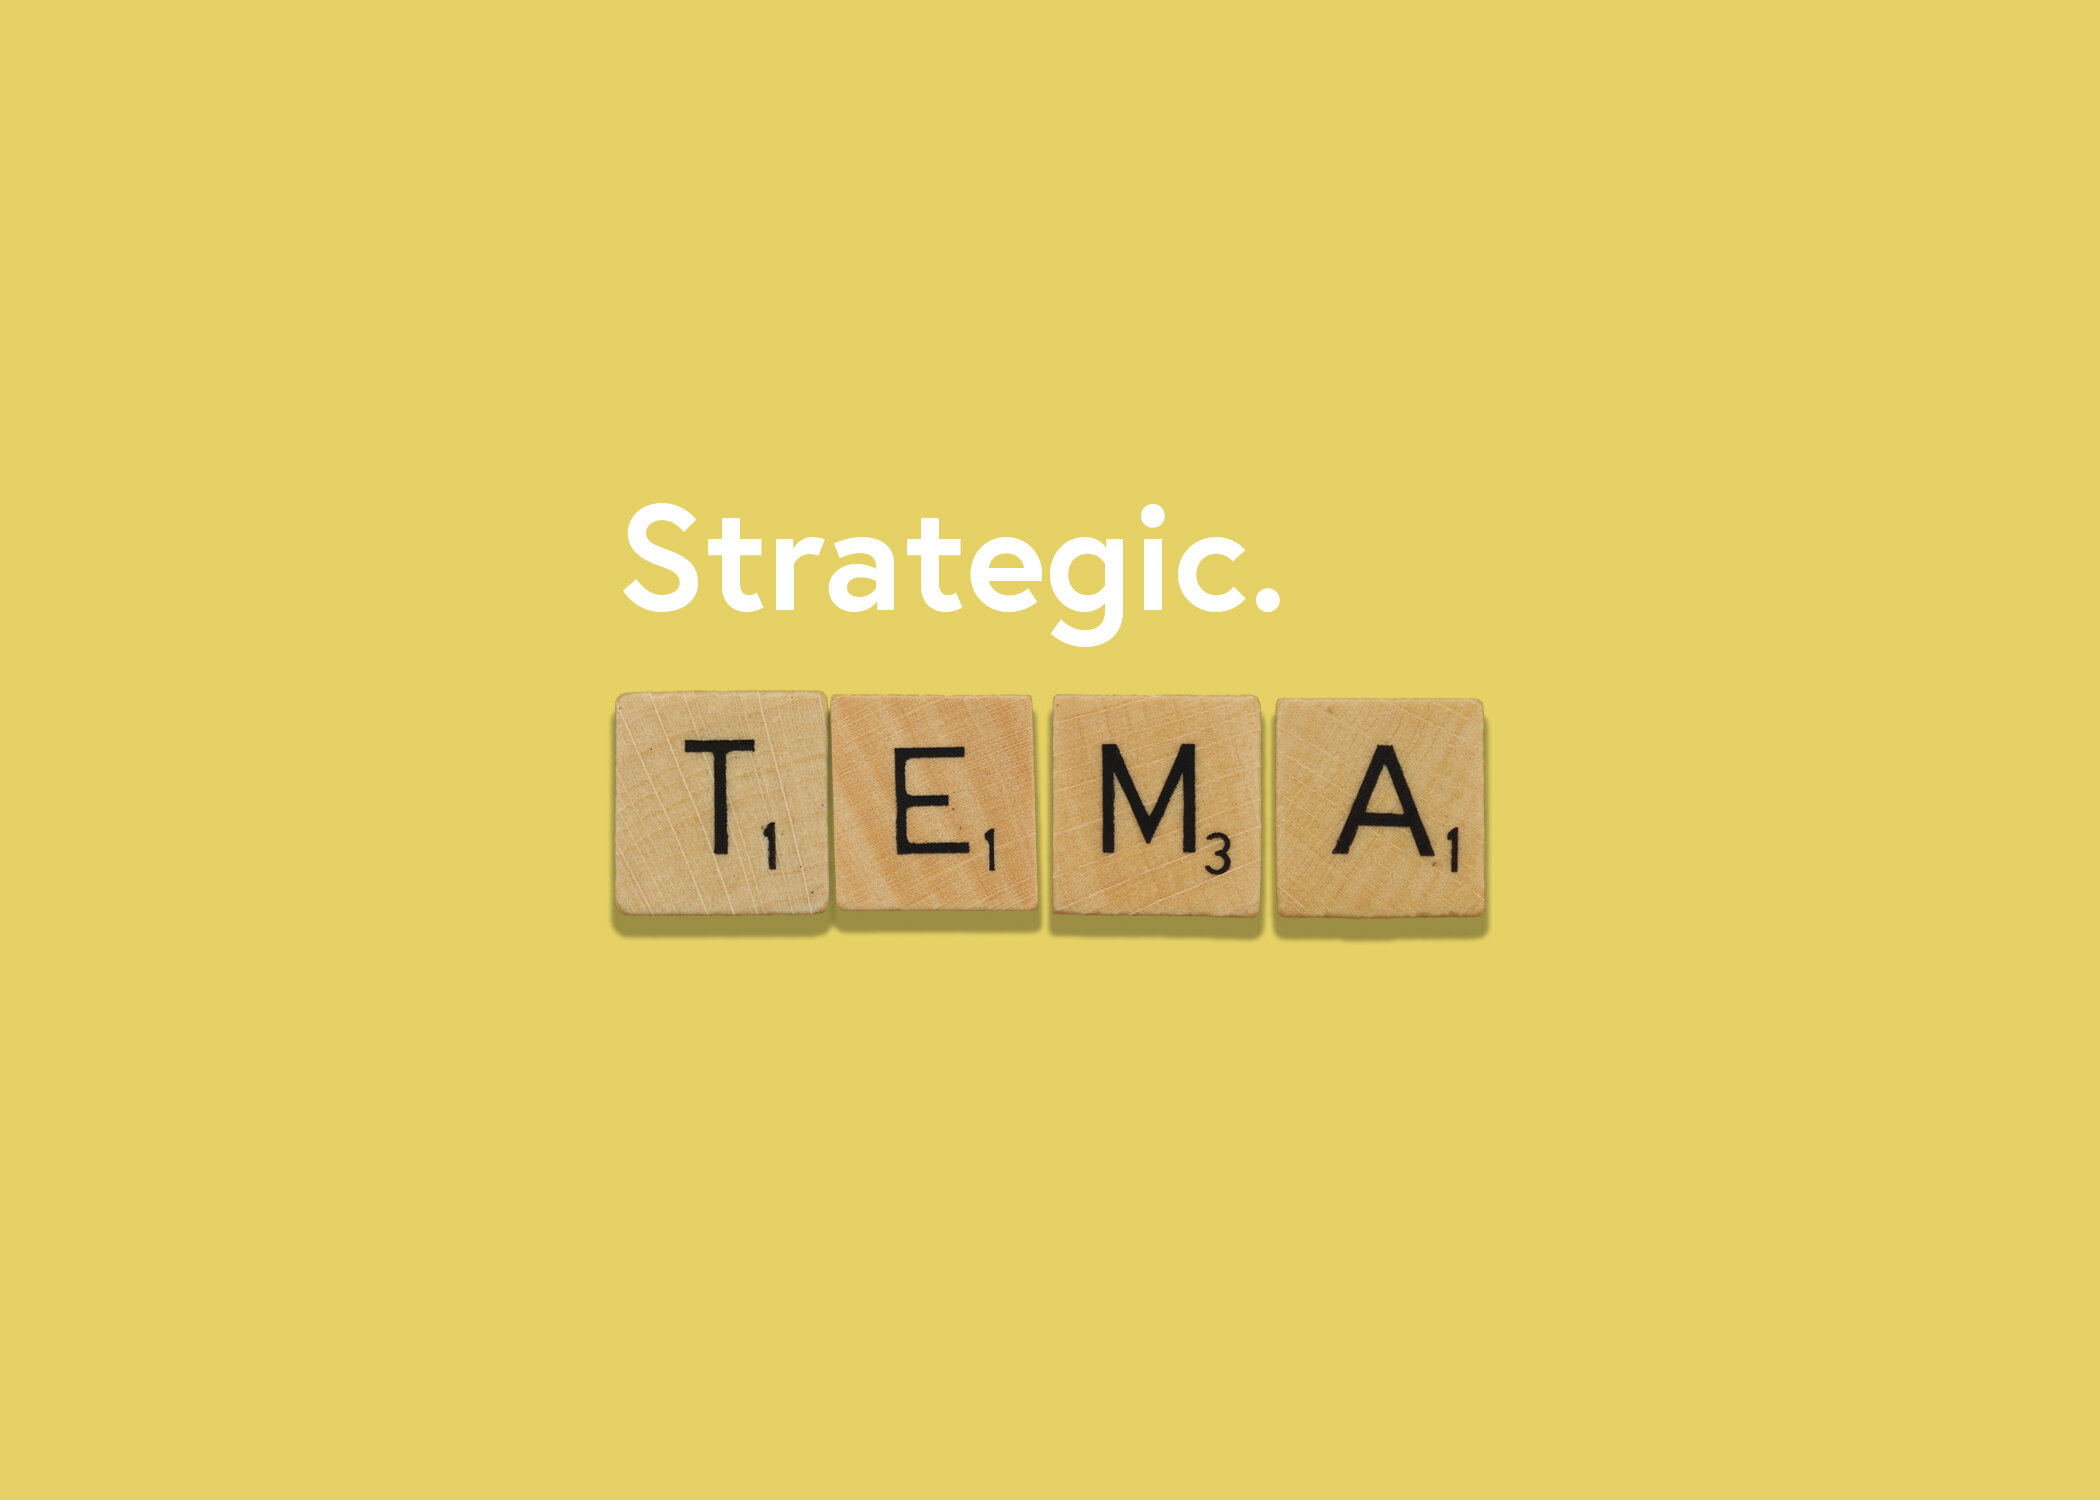 tema-scrabble-strategic1.jpg